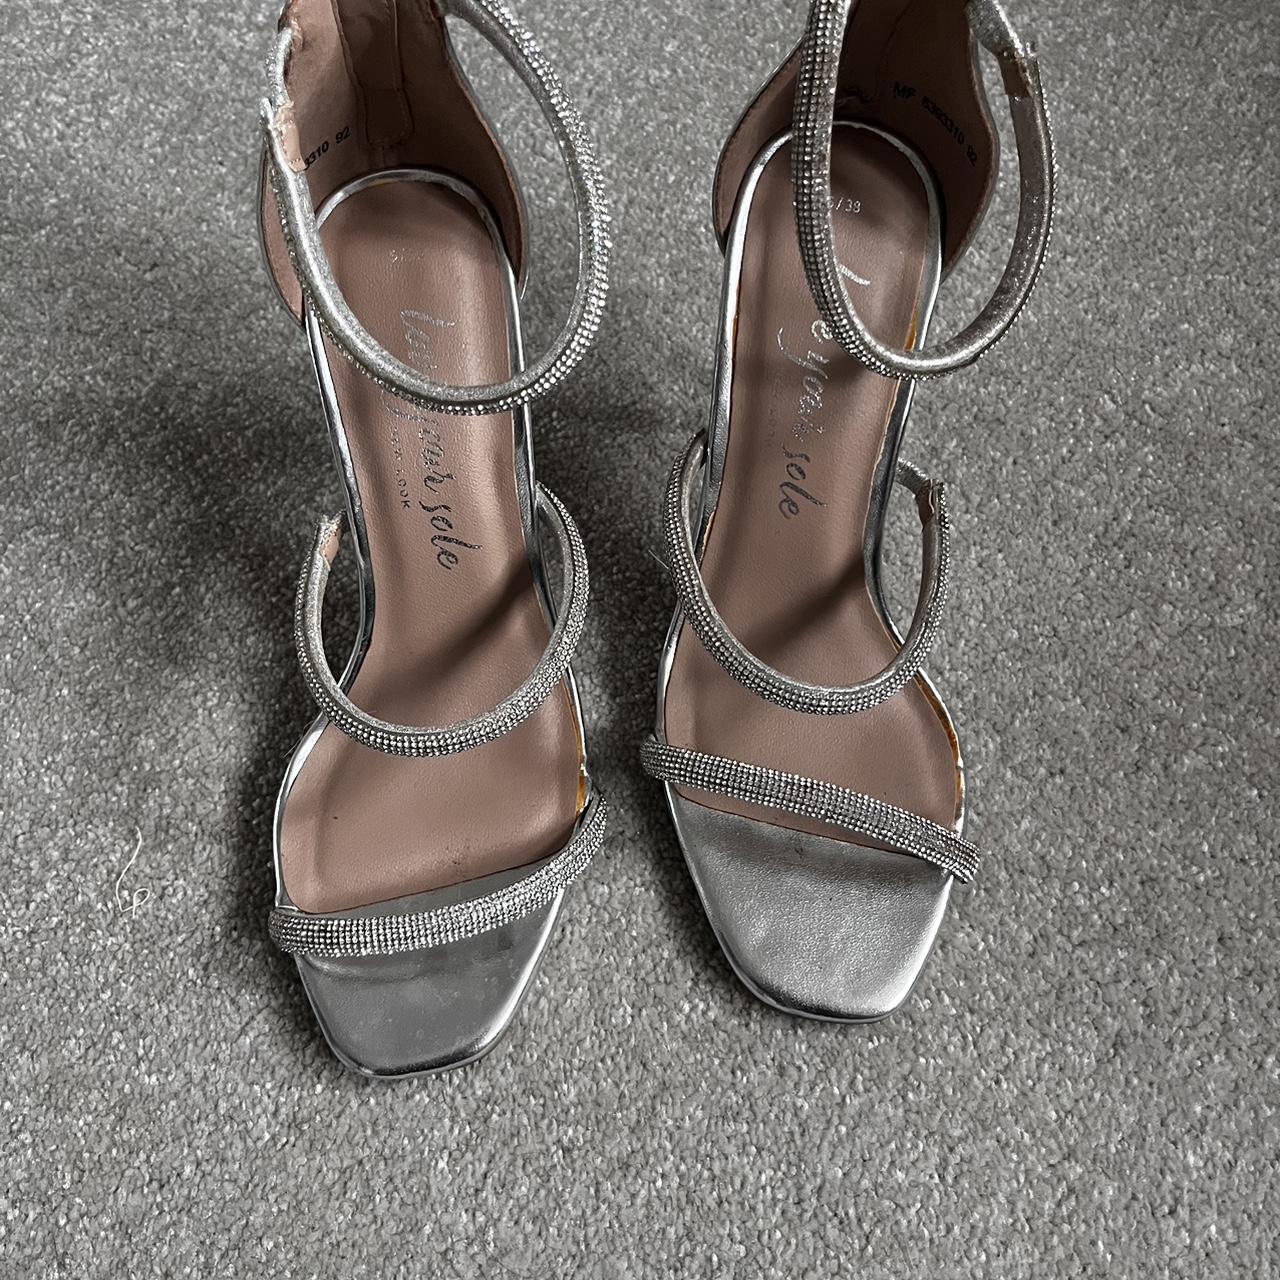 New look silver glitter heels Good condition - Depop